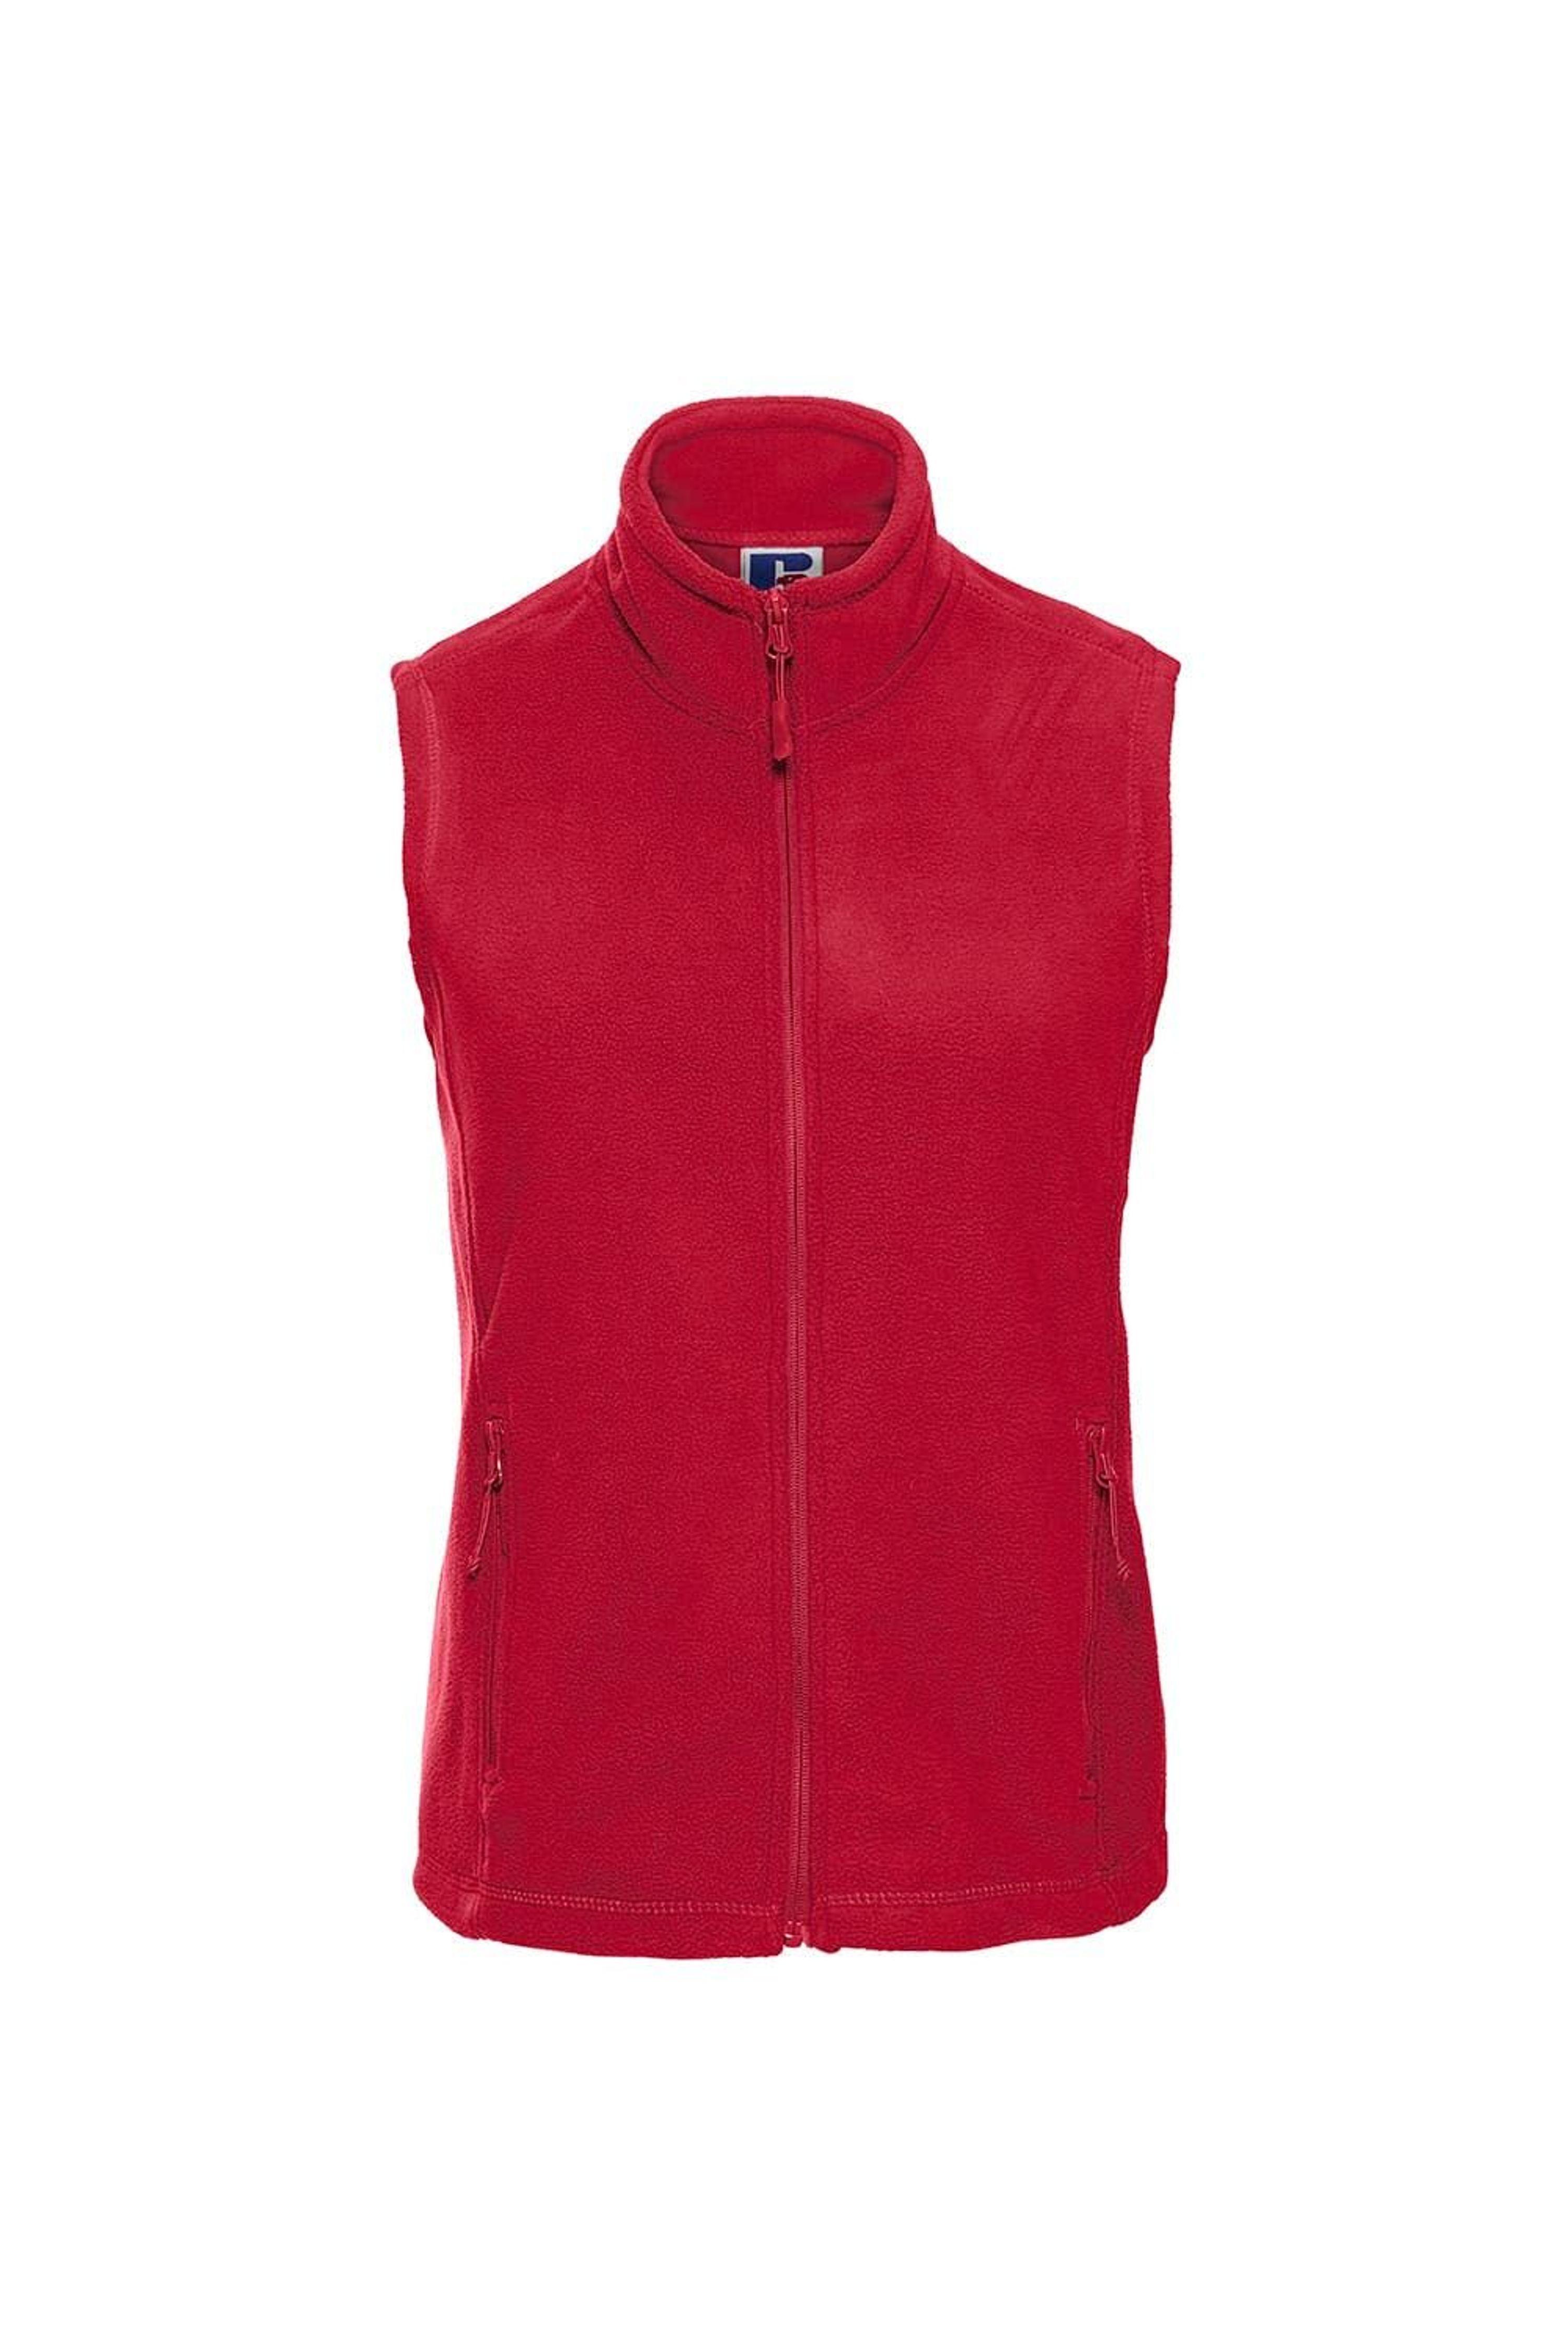 Russell Europe Outdoor Full-zip Anti-pill Fleece Vest Jacket in Red | Lyst